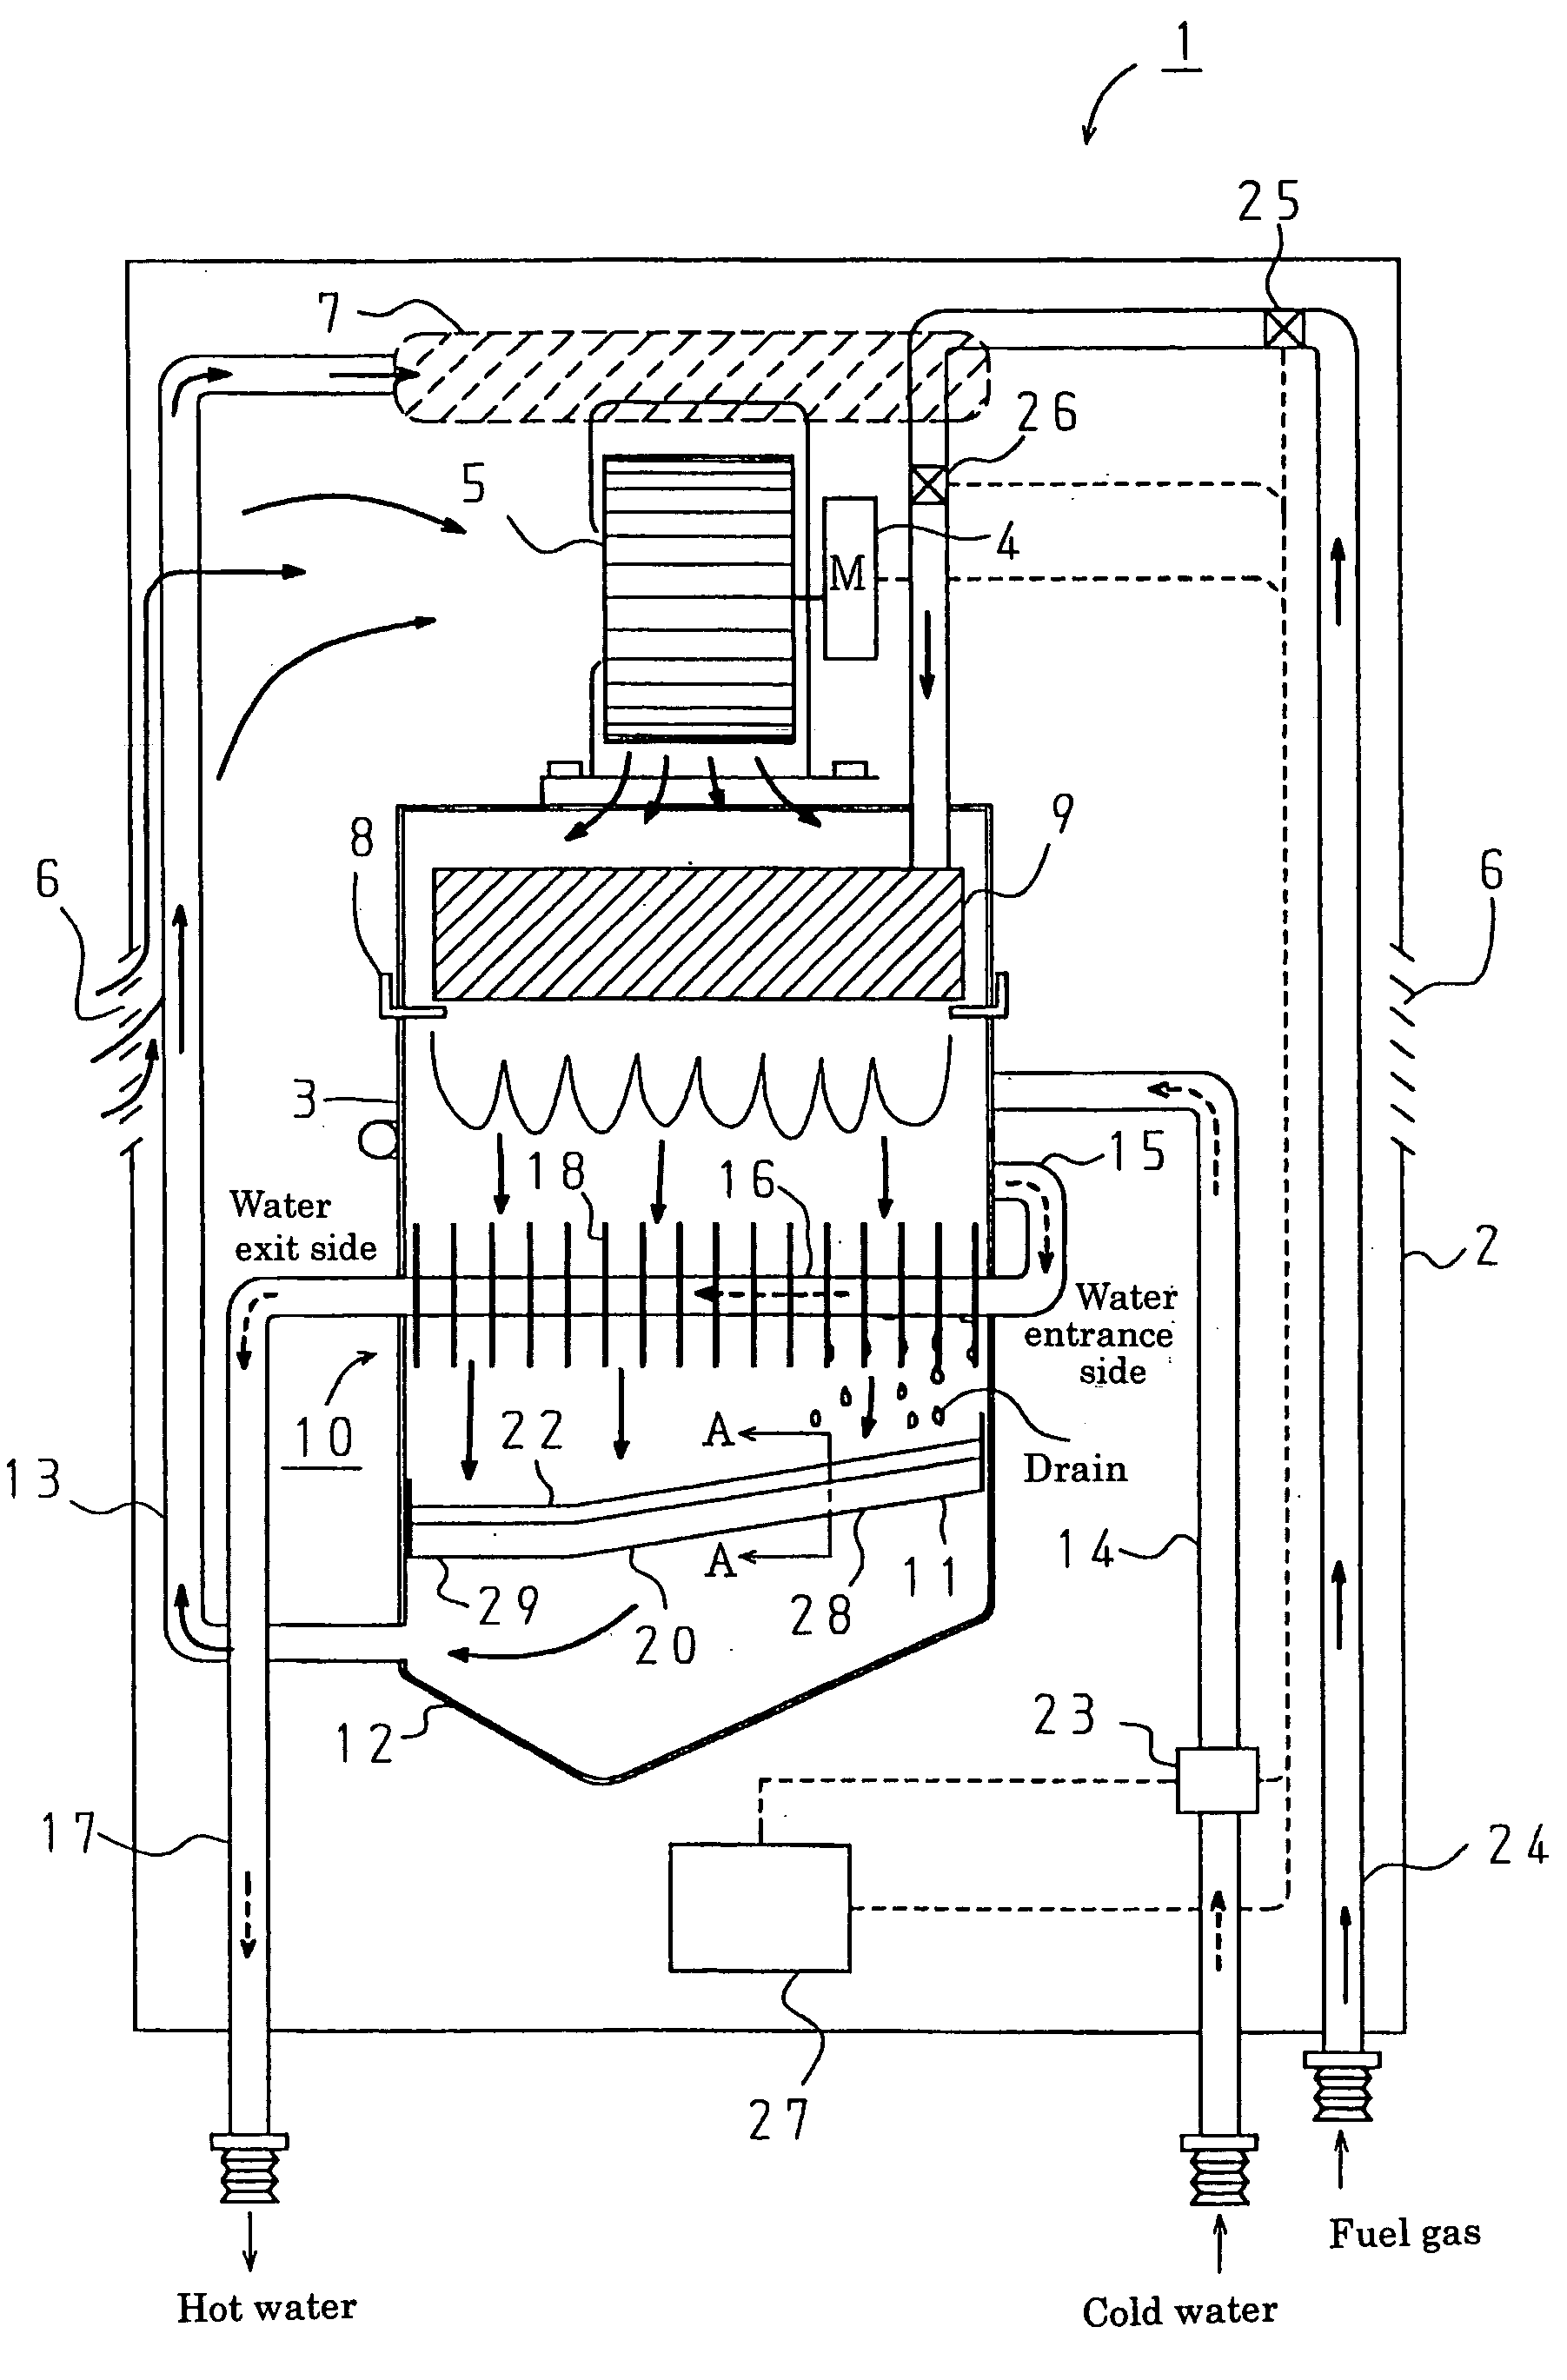 Hot water apparatus